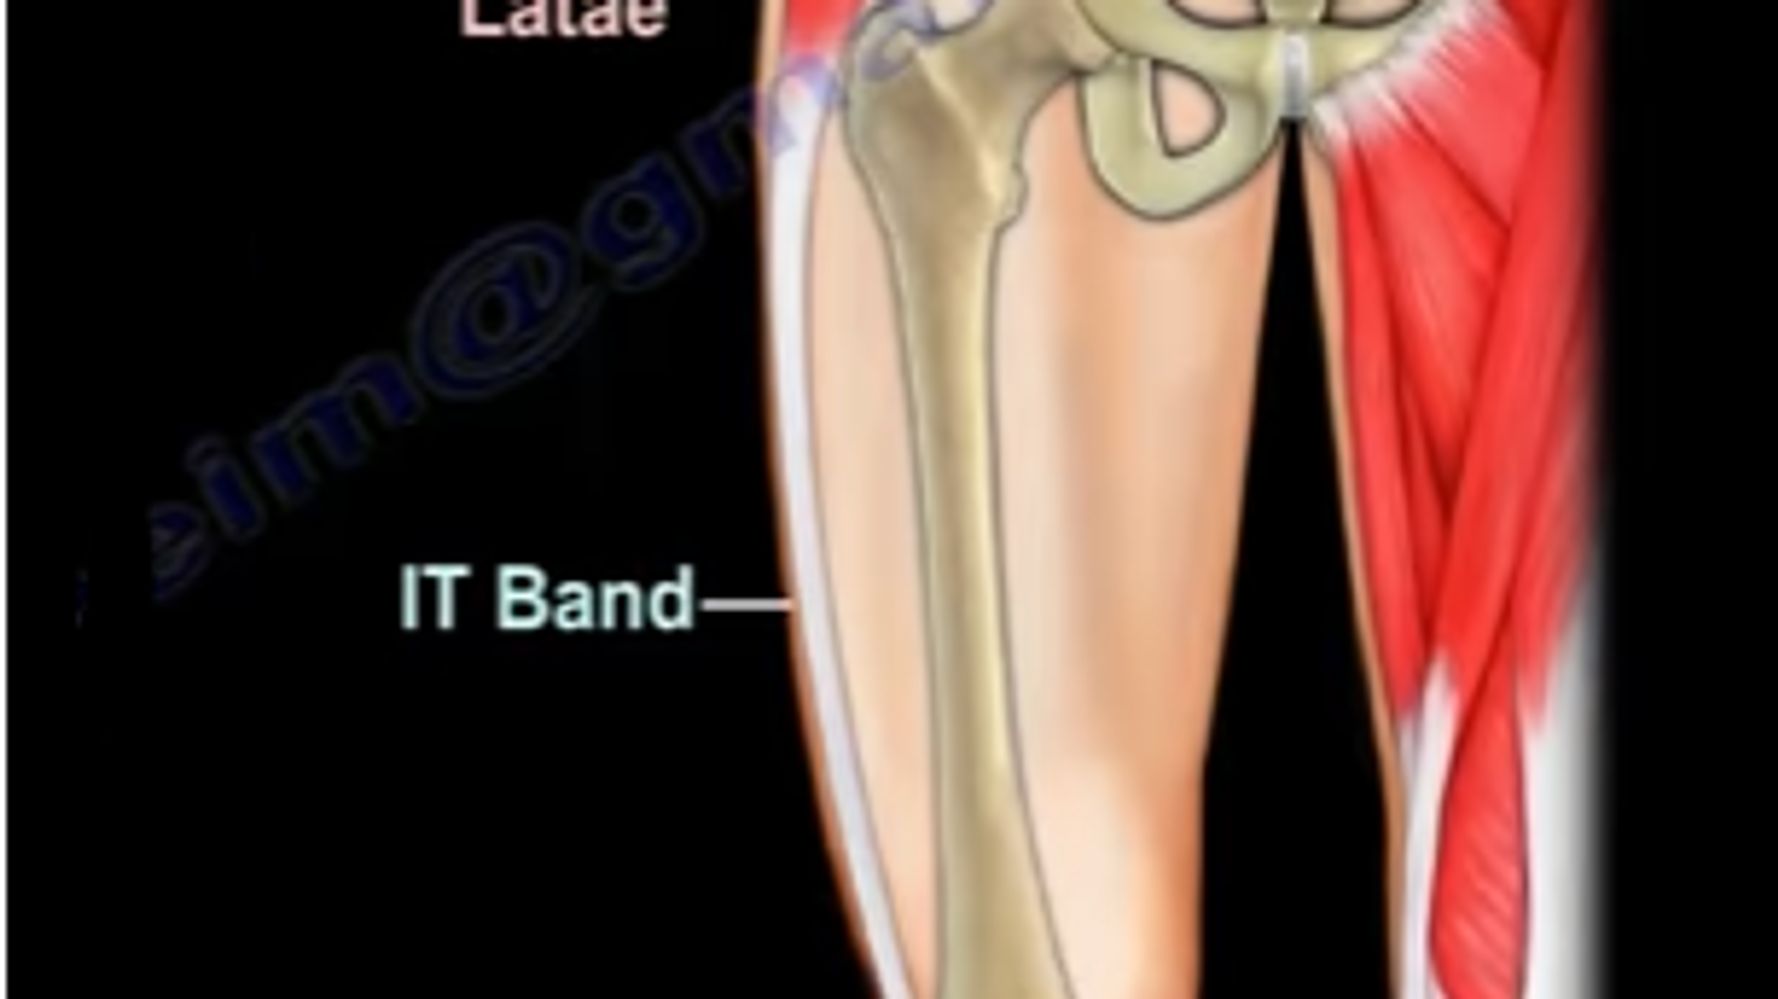 Iliotibial Band Syndrome- Around the Knee